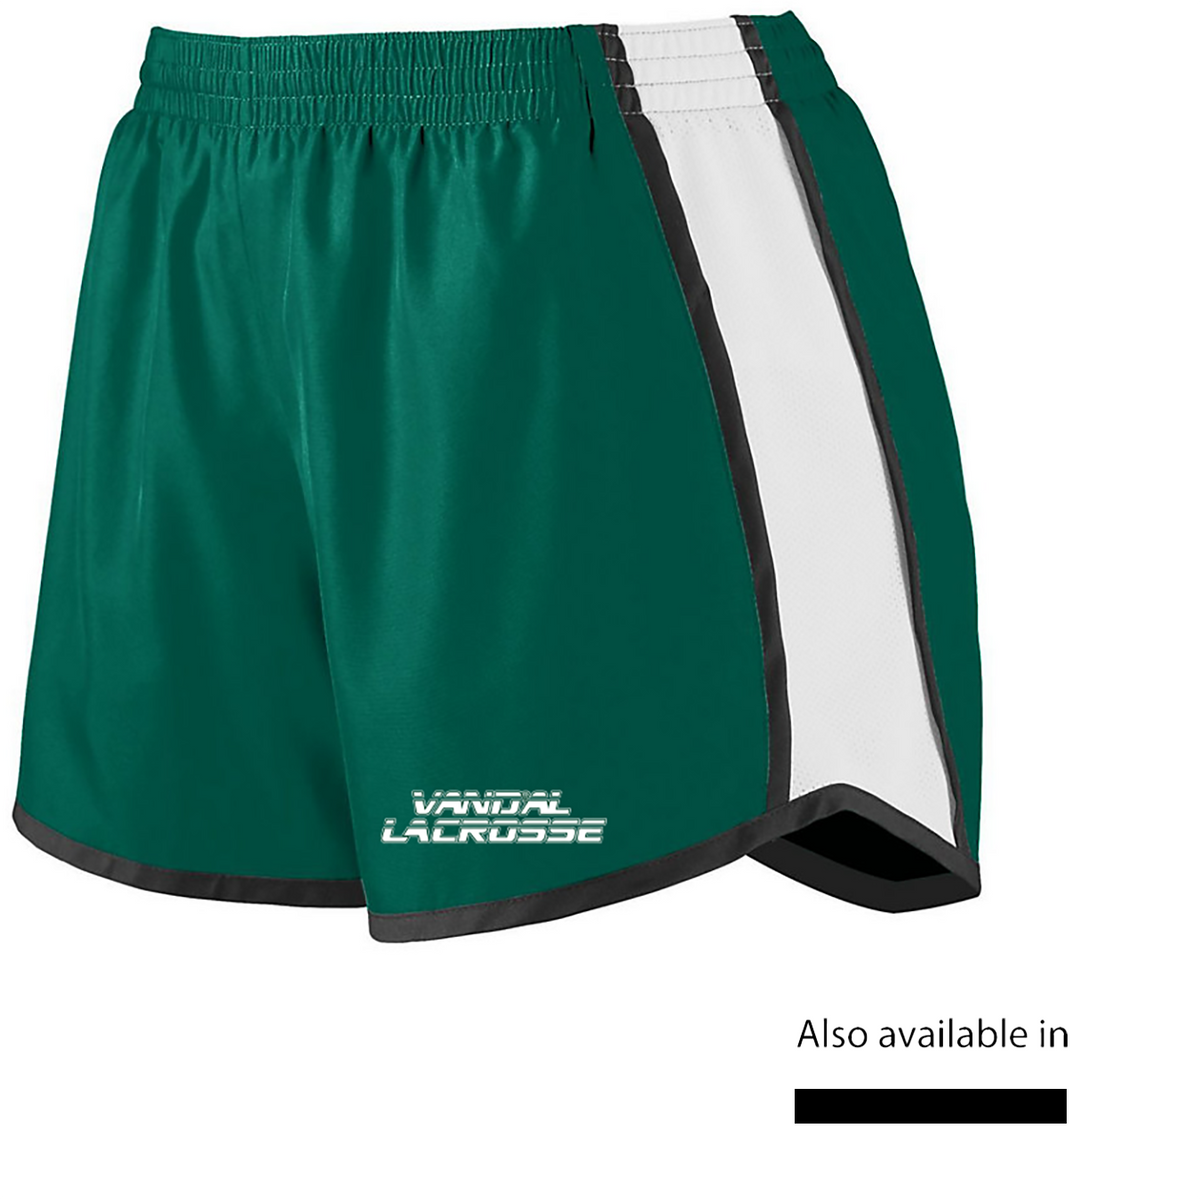 Vand'al Lacrosse Women's Pulse Shorts